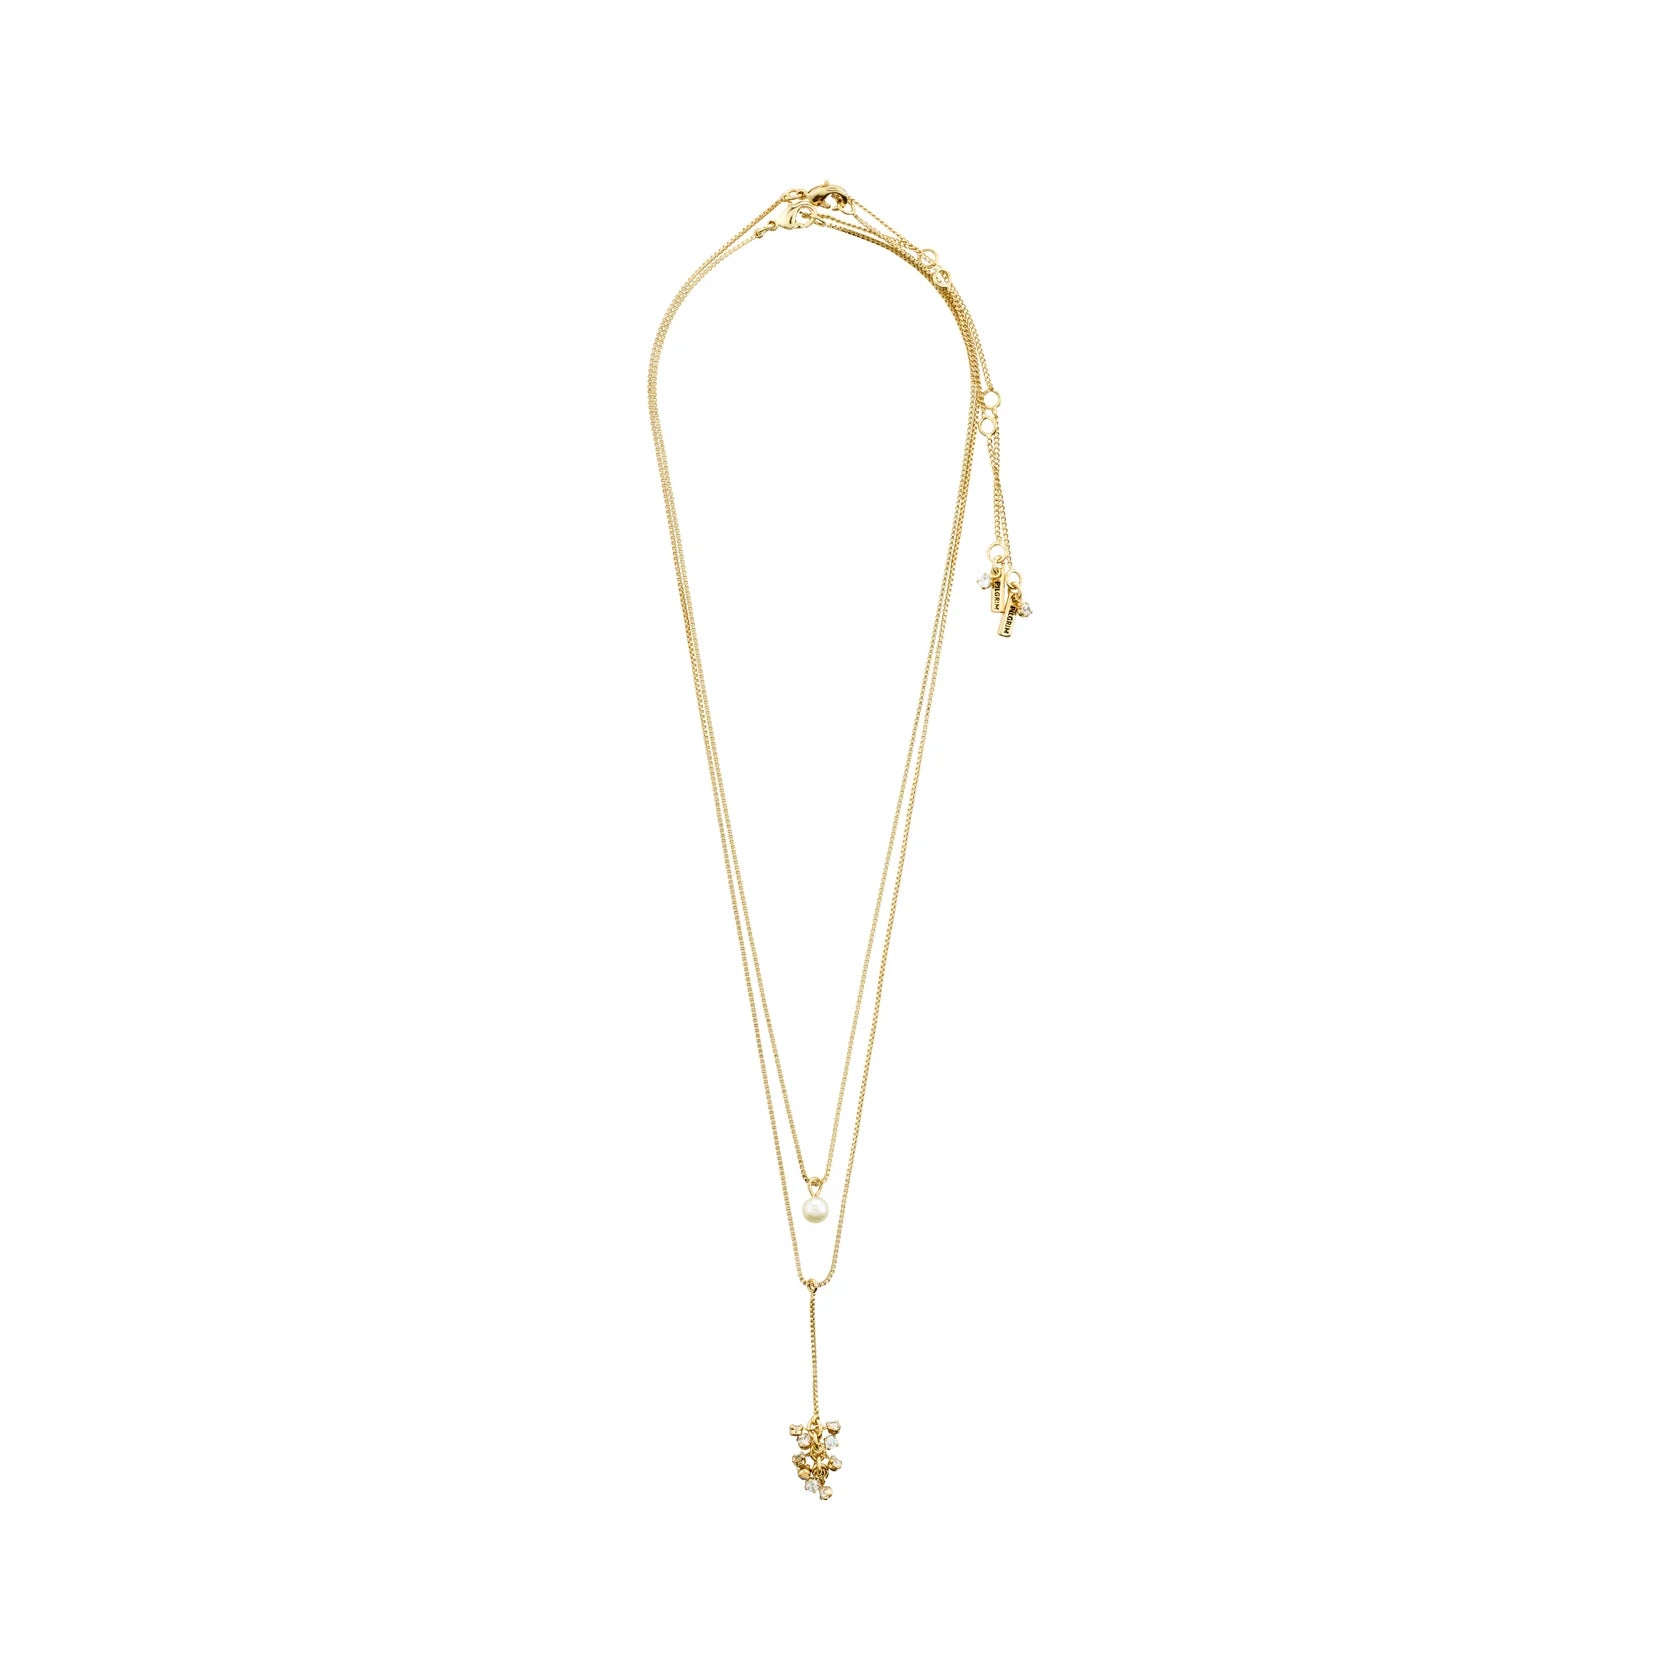 Jolene Gold Crystal & Pearl Necklace